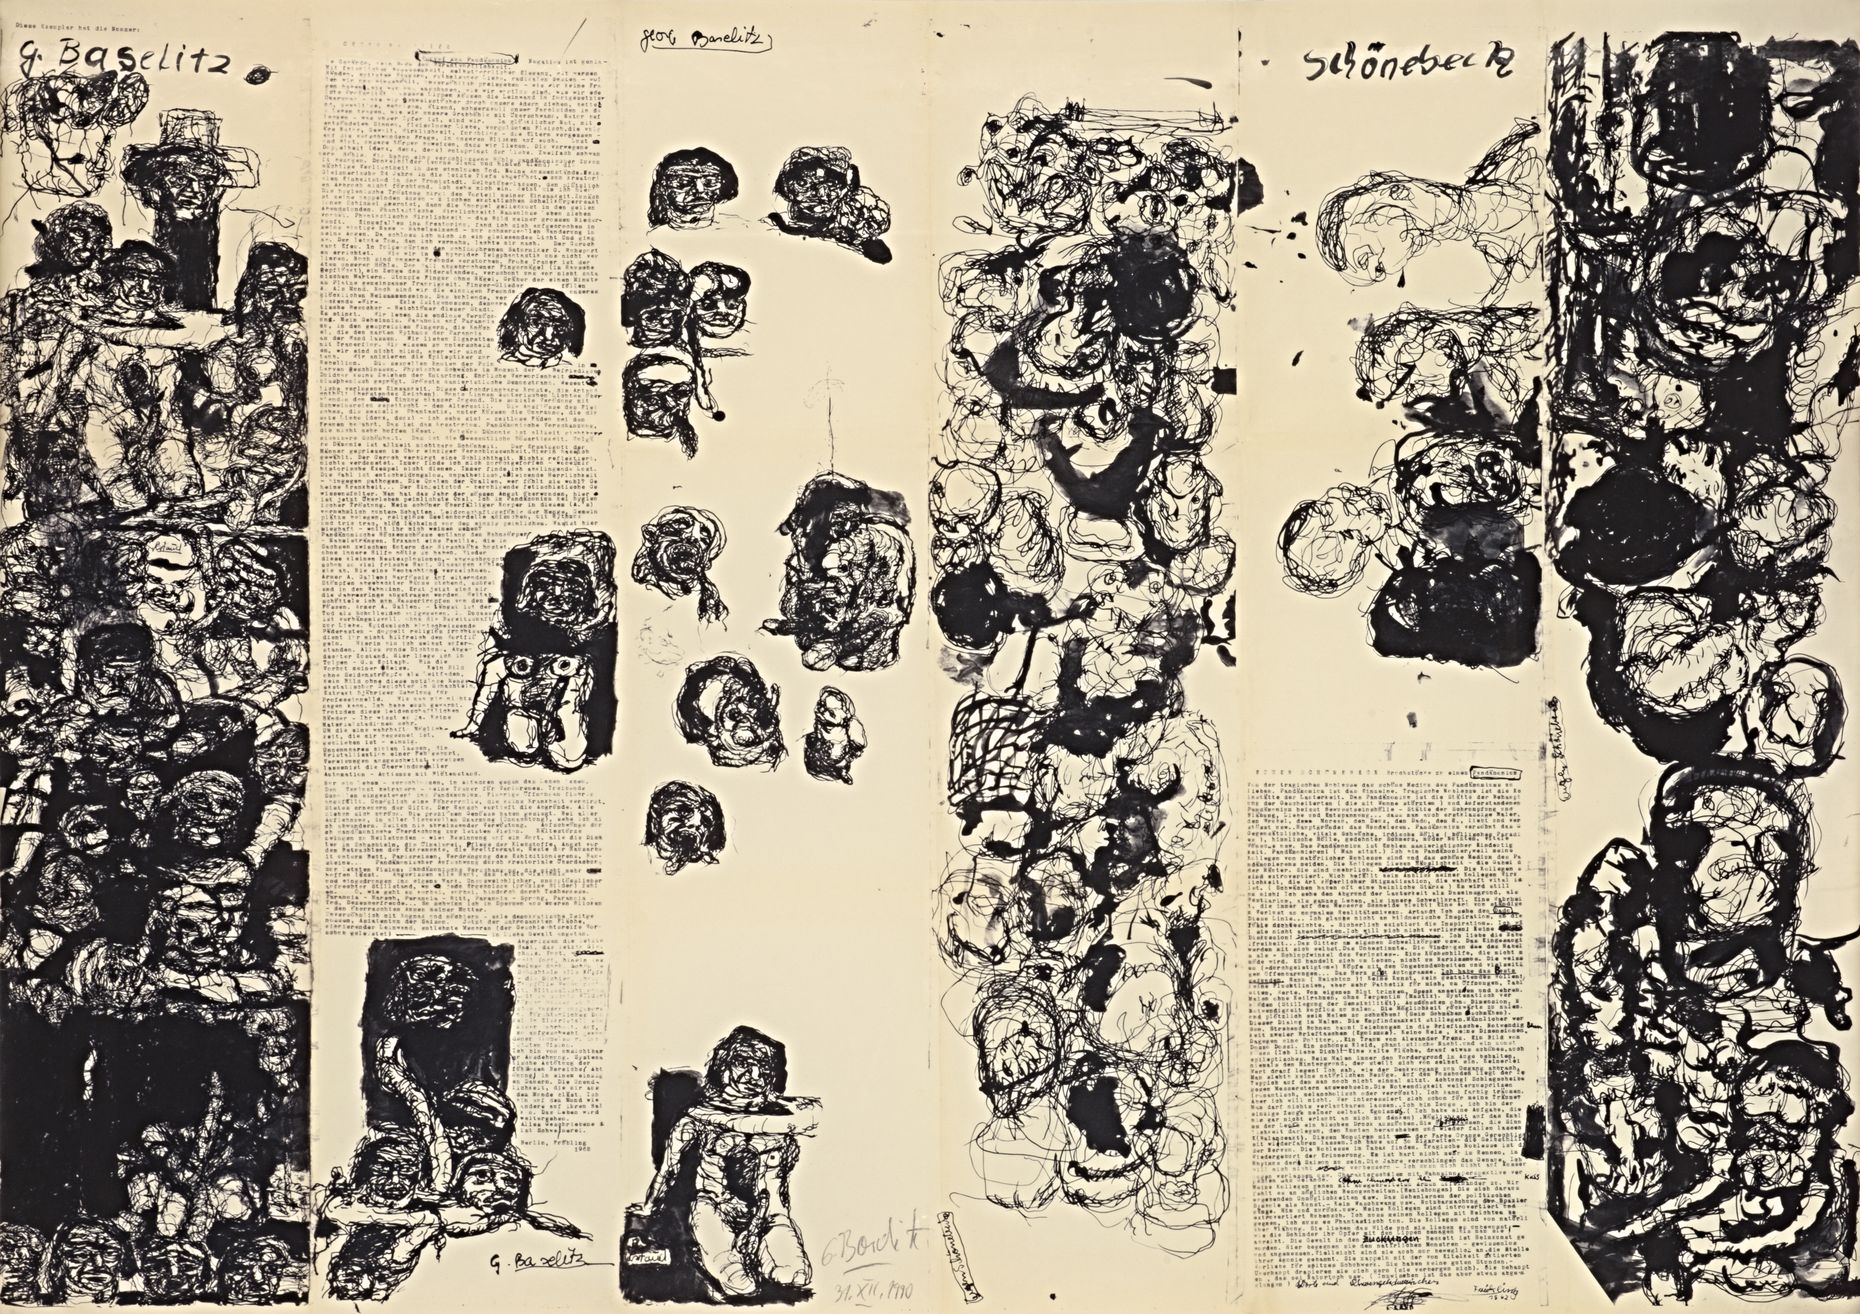 Illustration of an artistic manifesto written by Georg Baselitz and Eugen Schönebeck in 1962